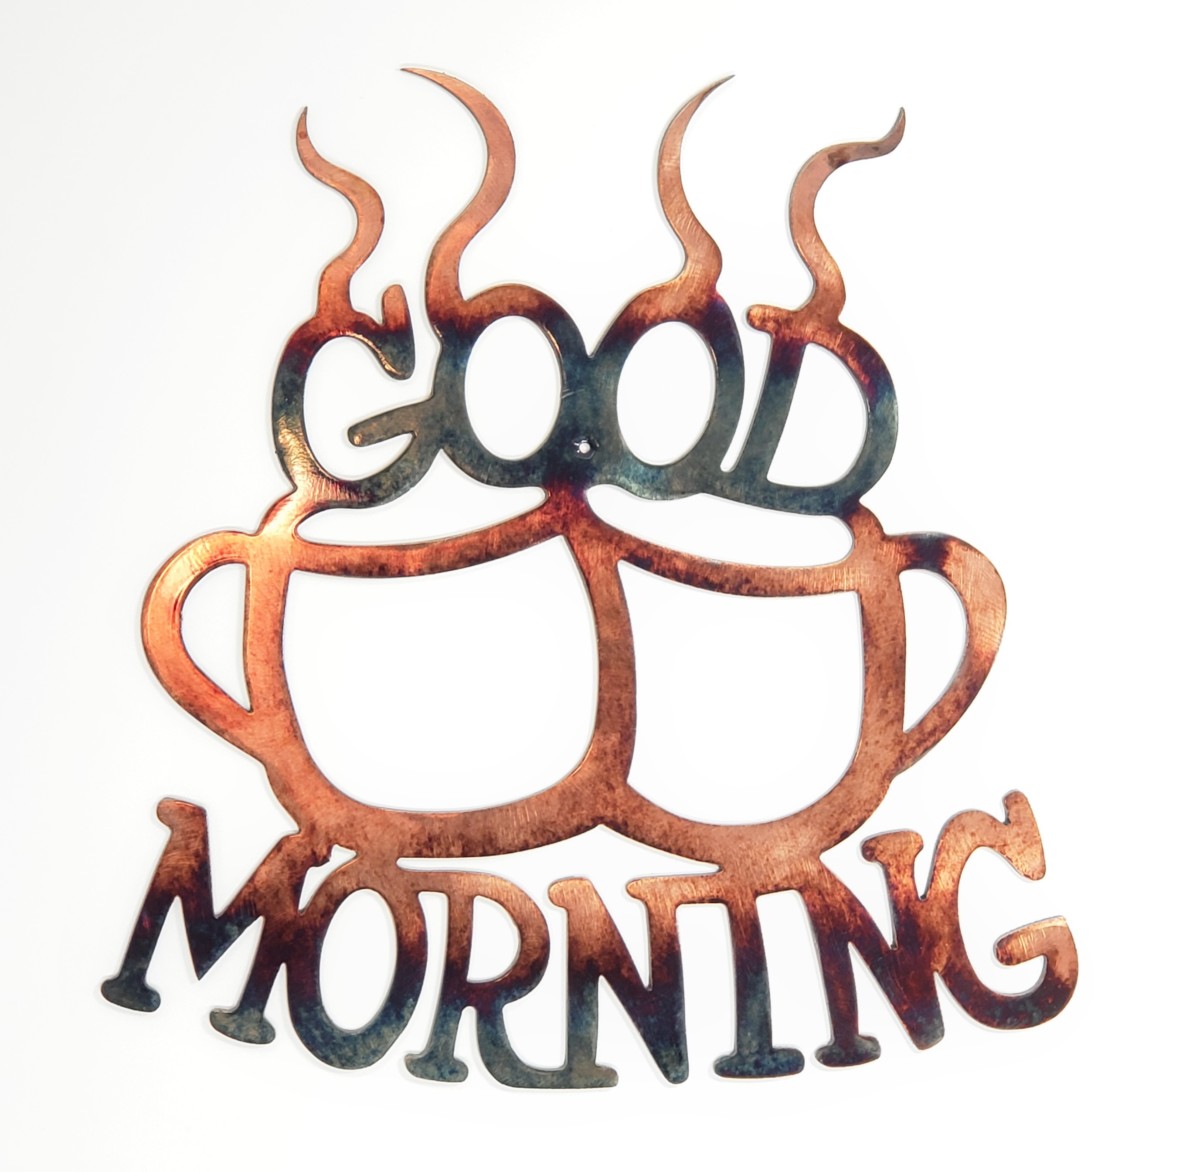 Good Morning Coffee Metal Wall Art - Metal Decor Studios